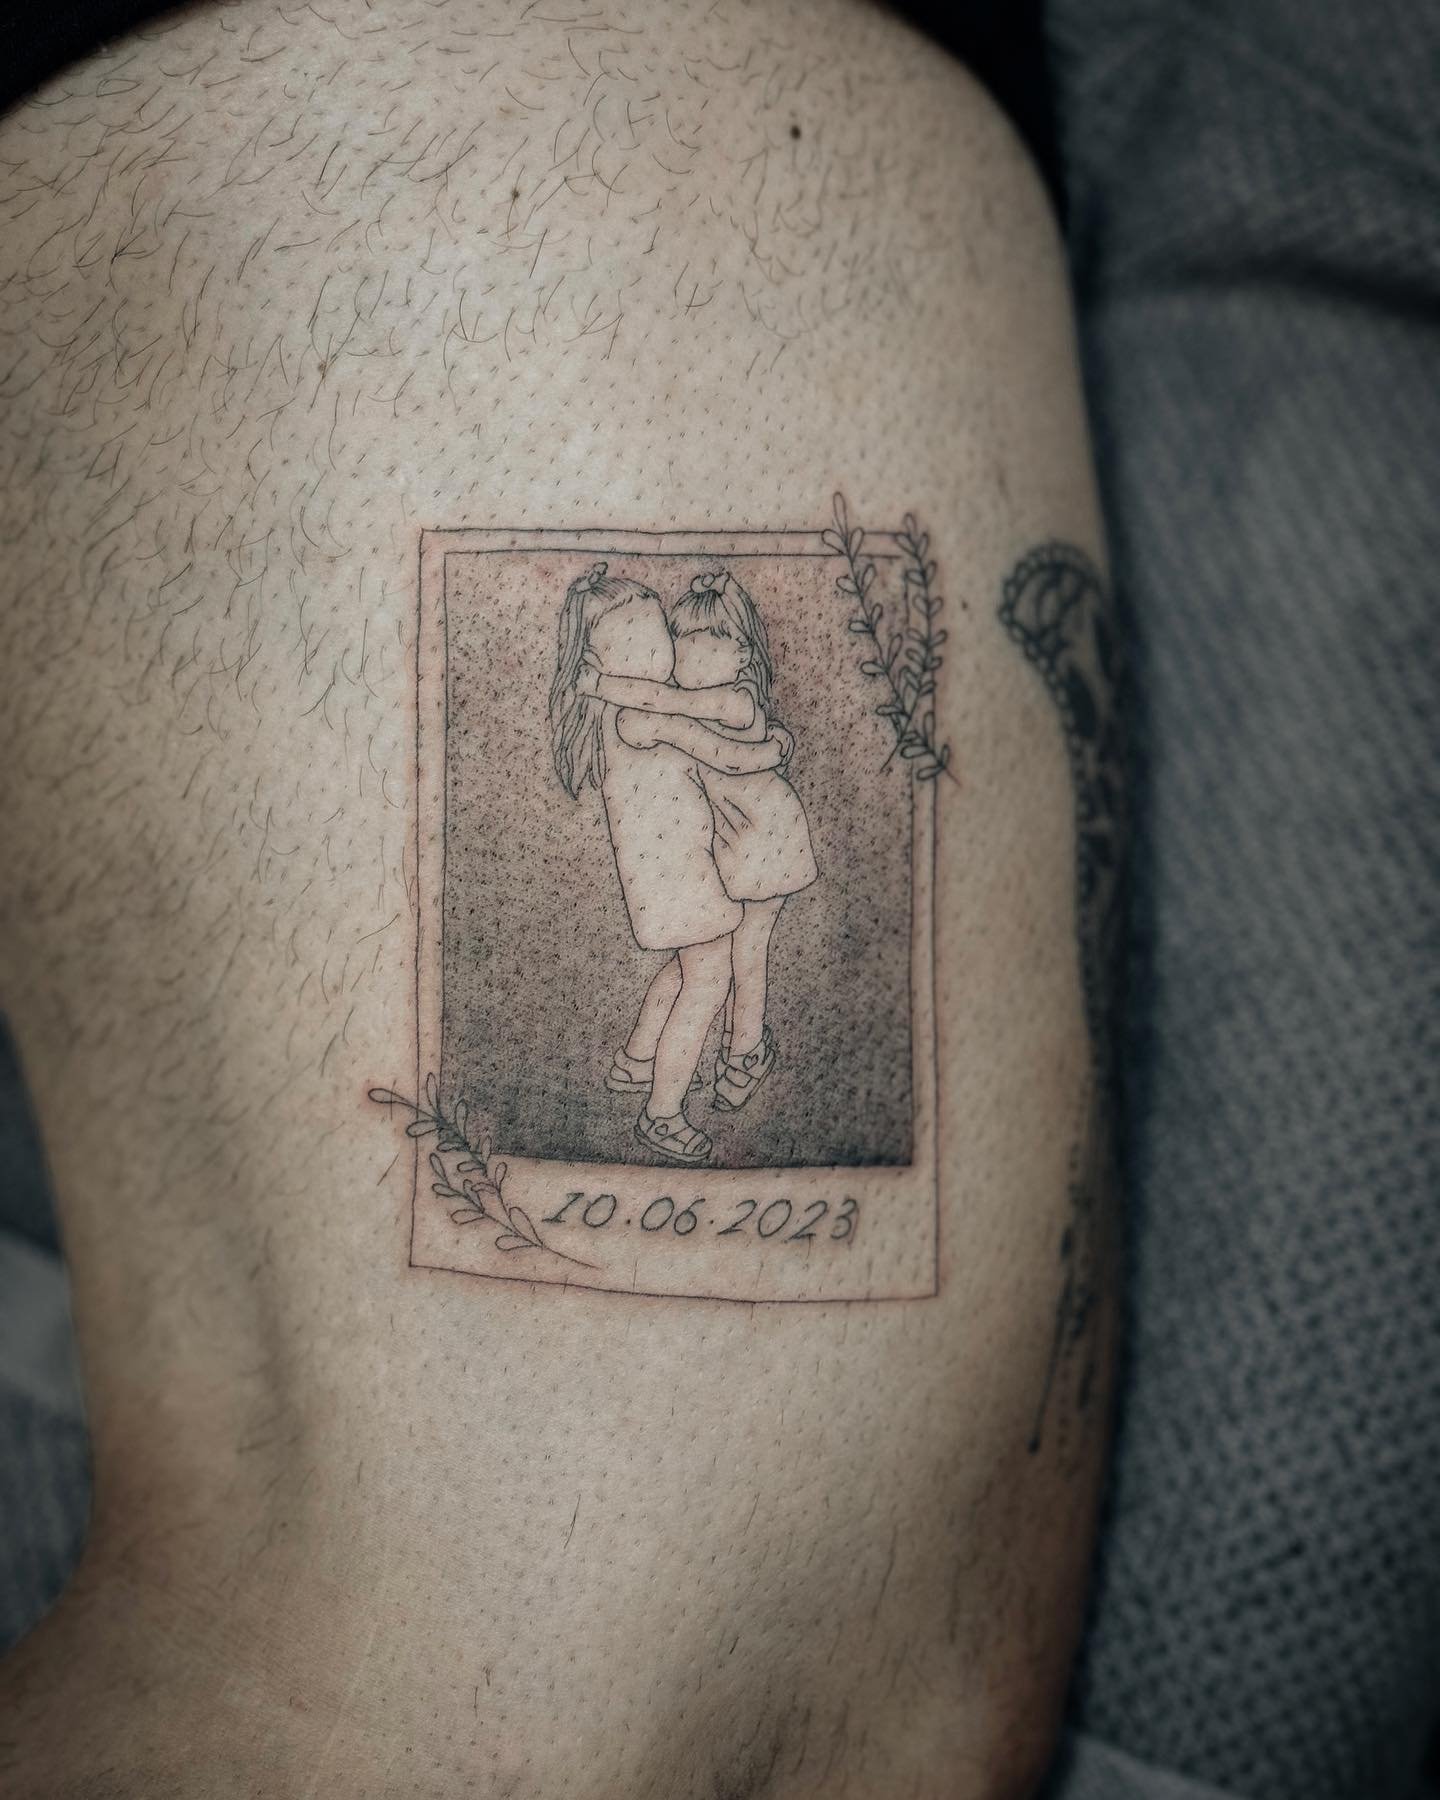 Family tattoo &mdash; his own kids 
.
.
.
#tattoo #tattooideas #birsfelden #basel #studio #switzerland #ink #tattooformen #tattooforwomen #familytattoo #kidstattoo #sistertattoo